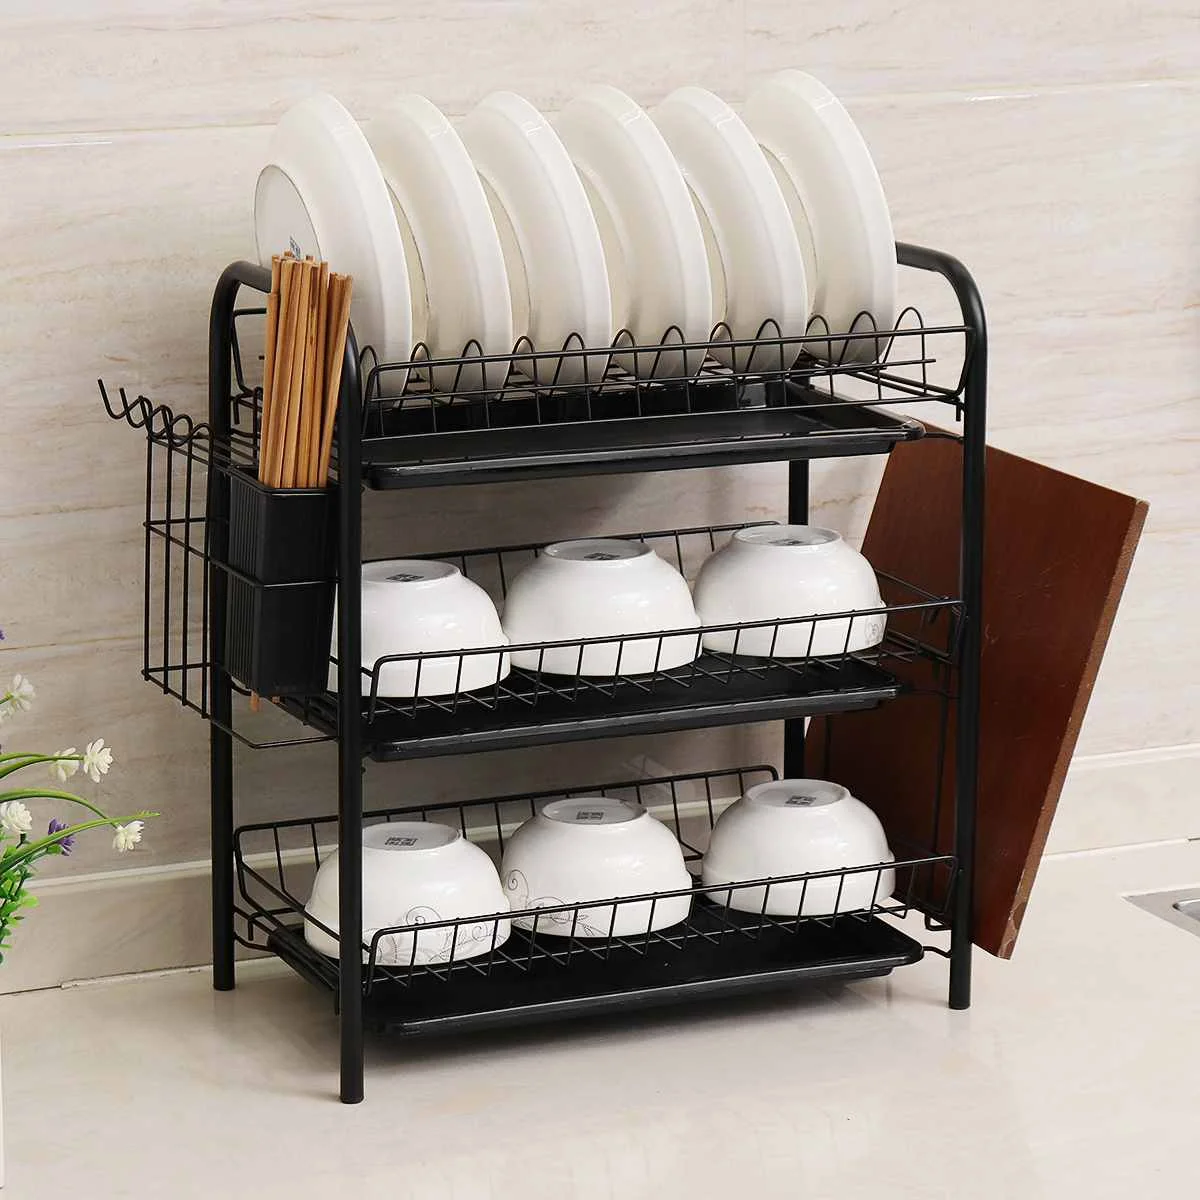 

3 Tiers Dish Drying Rack Drainer Plate Holder Storage Shelf Kitchen Organizer Stand Sink Drain Cutting Board Holder Drainboard